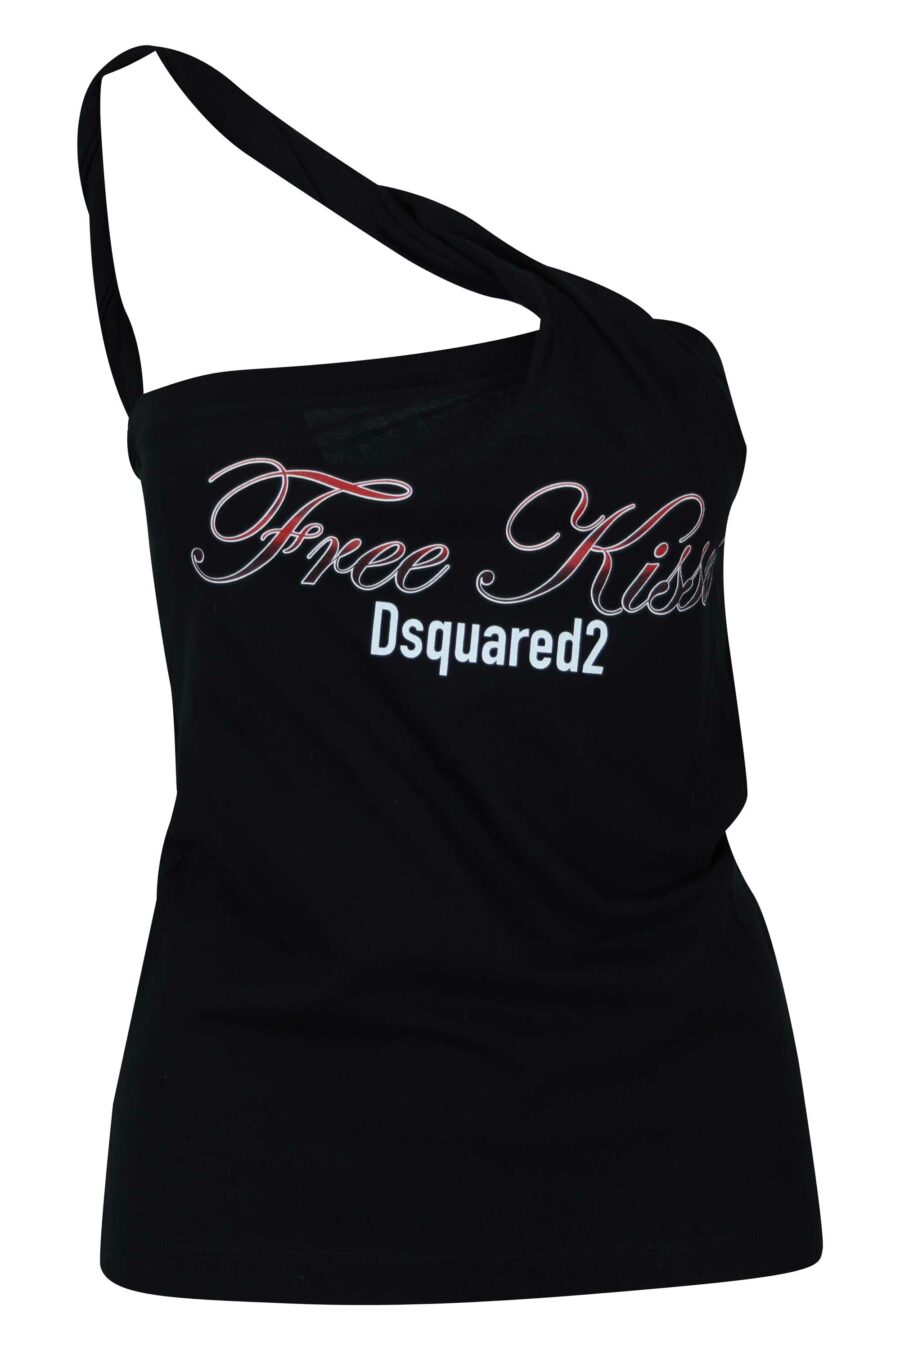 T-shirt noir sans manches "free kiss" - 8054148495824